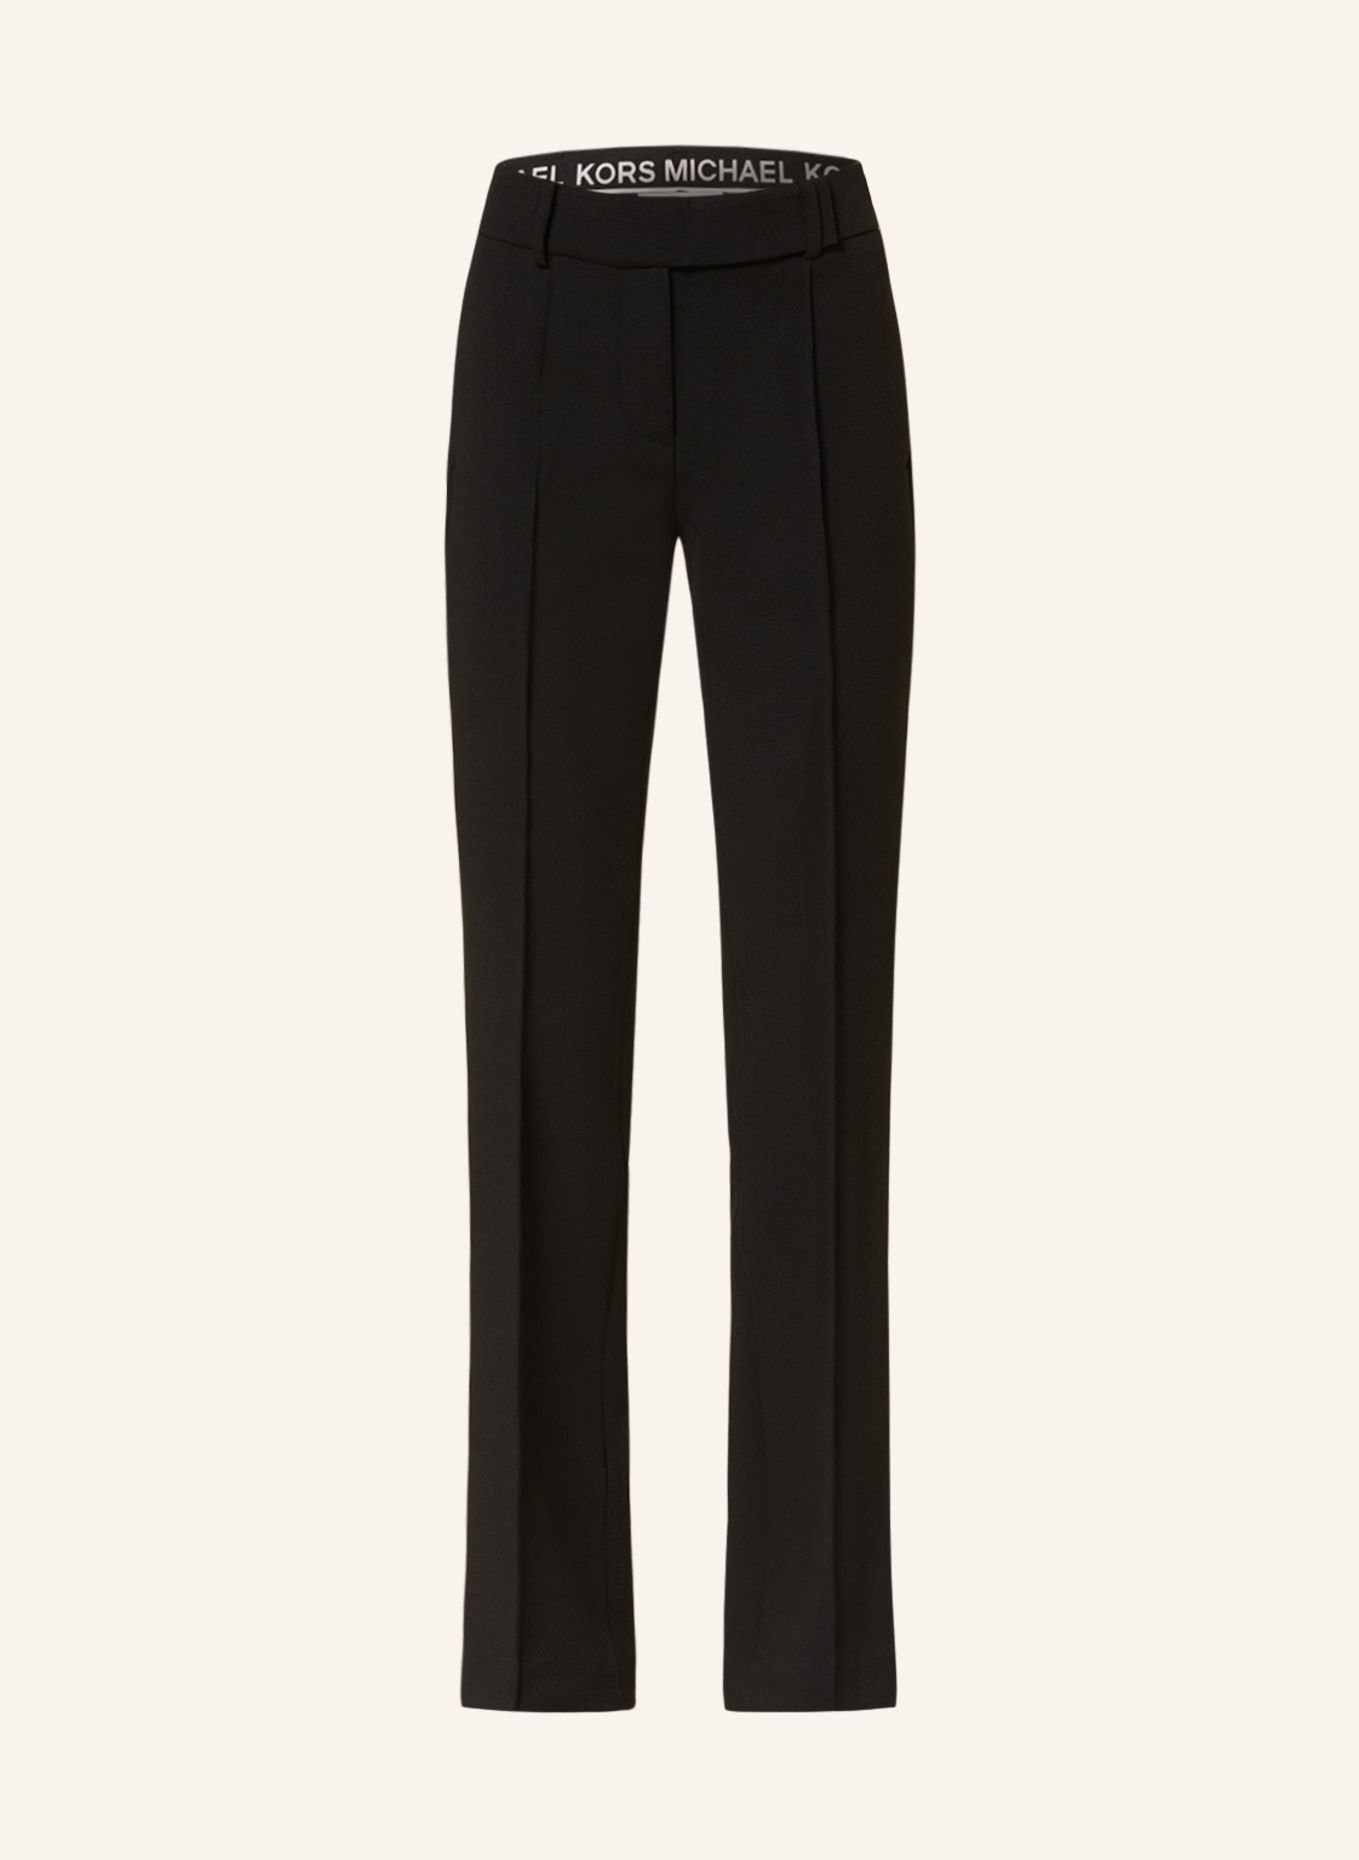 Michael By Michael Kors Pants Womens 4 Black Low Rise Slim Fit Trousers  Preppy | eBay